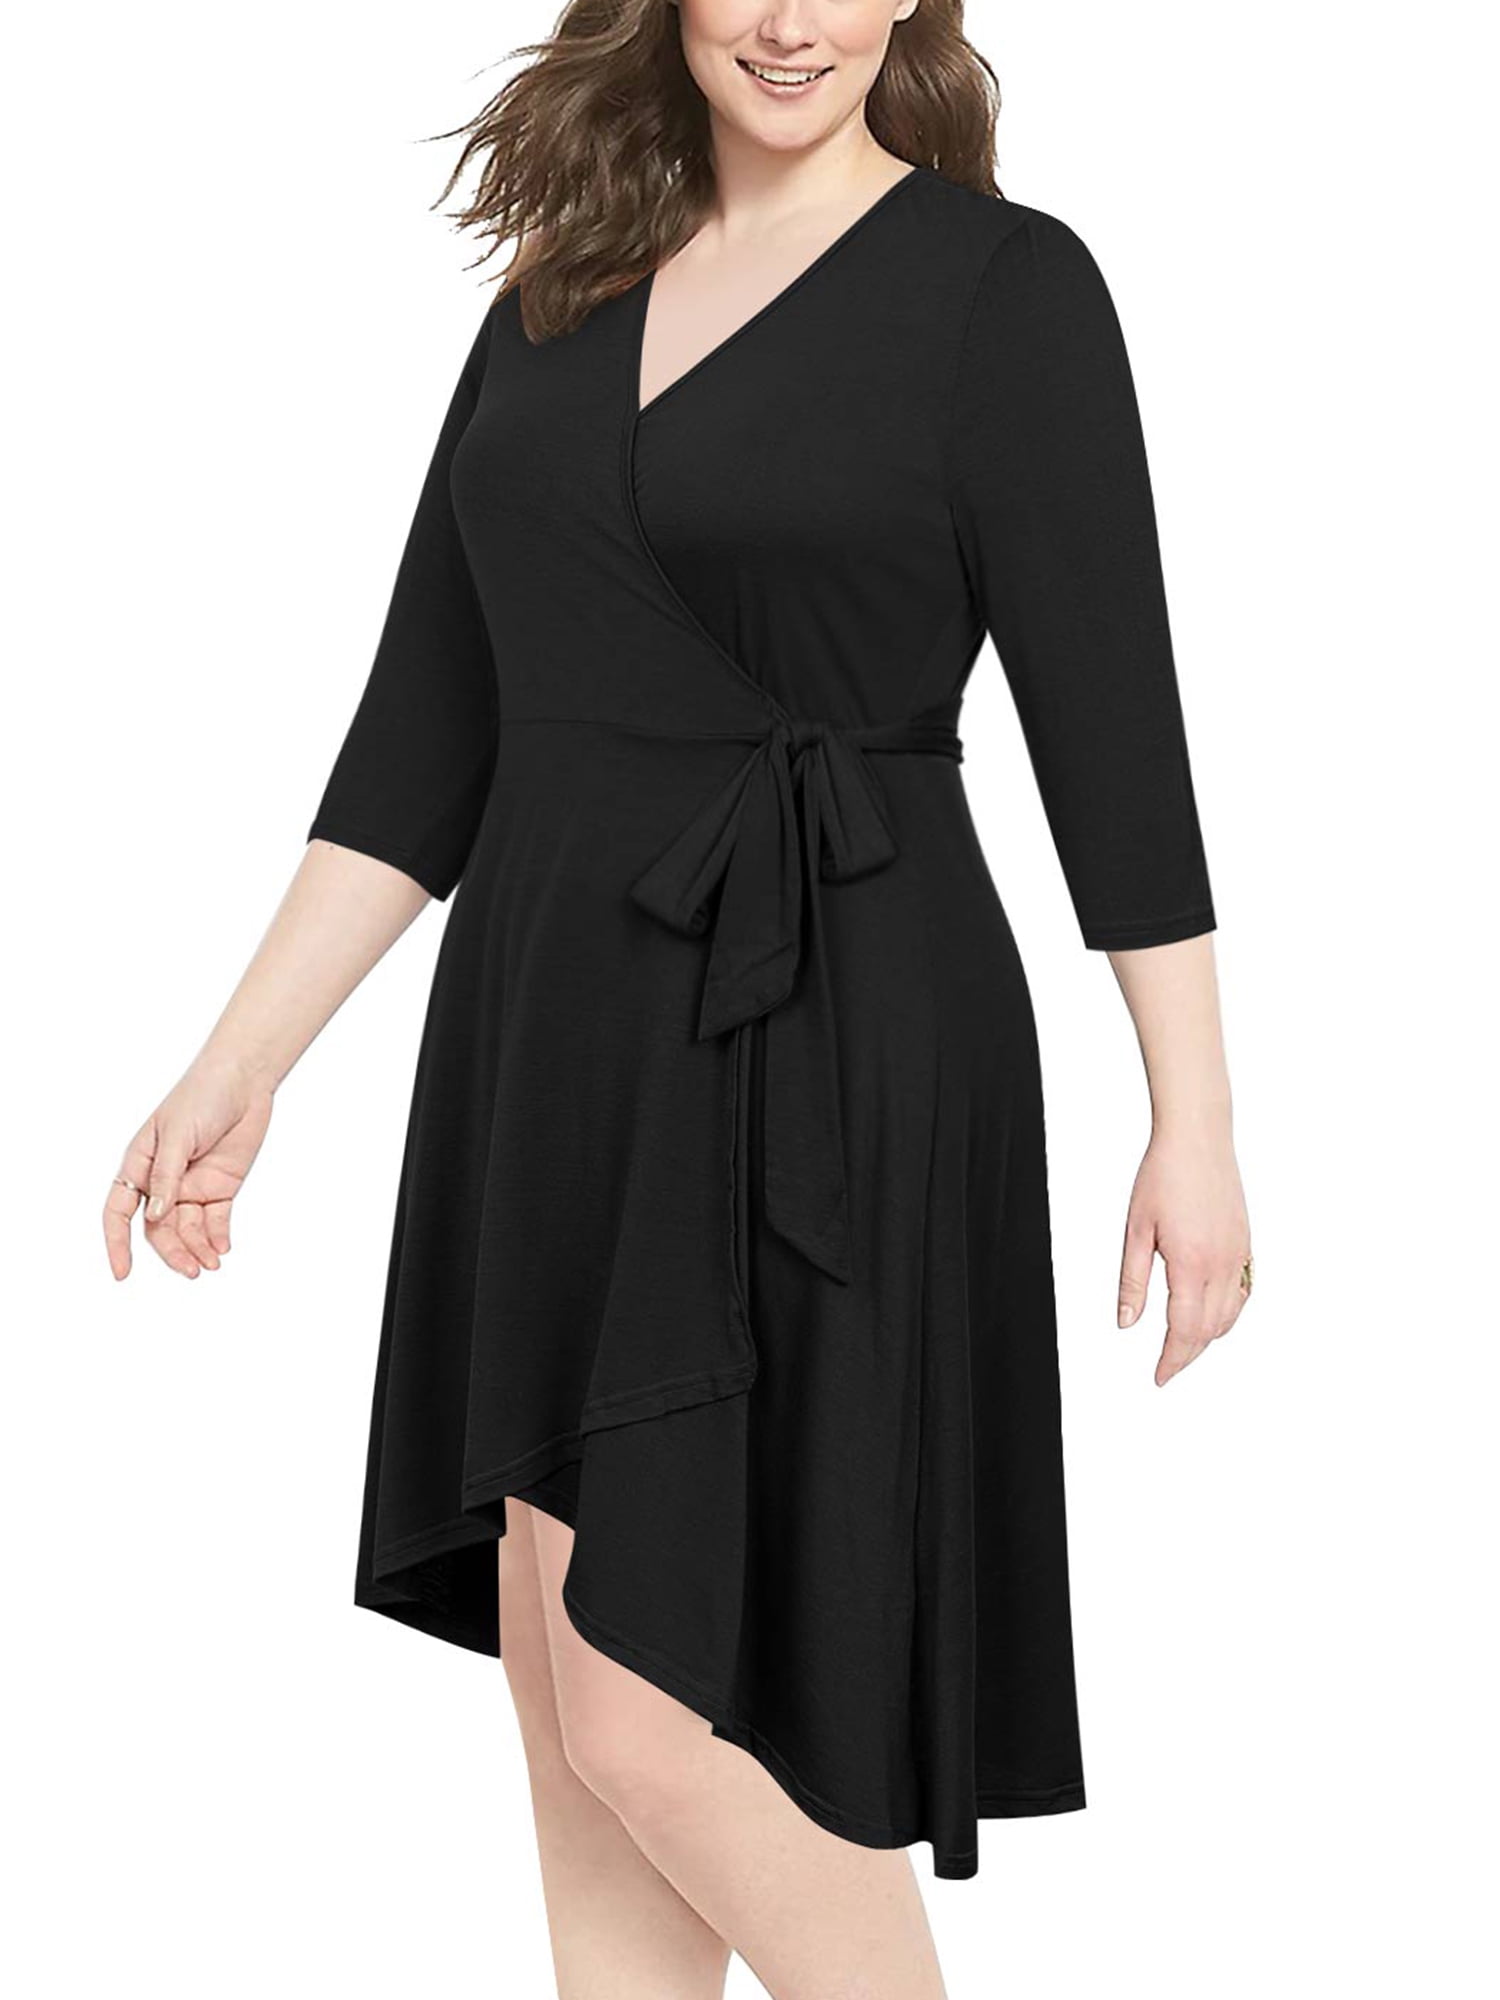 *NEW Woman's Black 3/4 Sleeve A-Line Flattering Black Midi Dress Size Large 